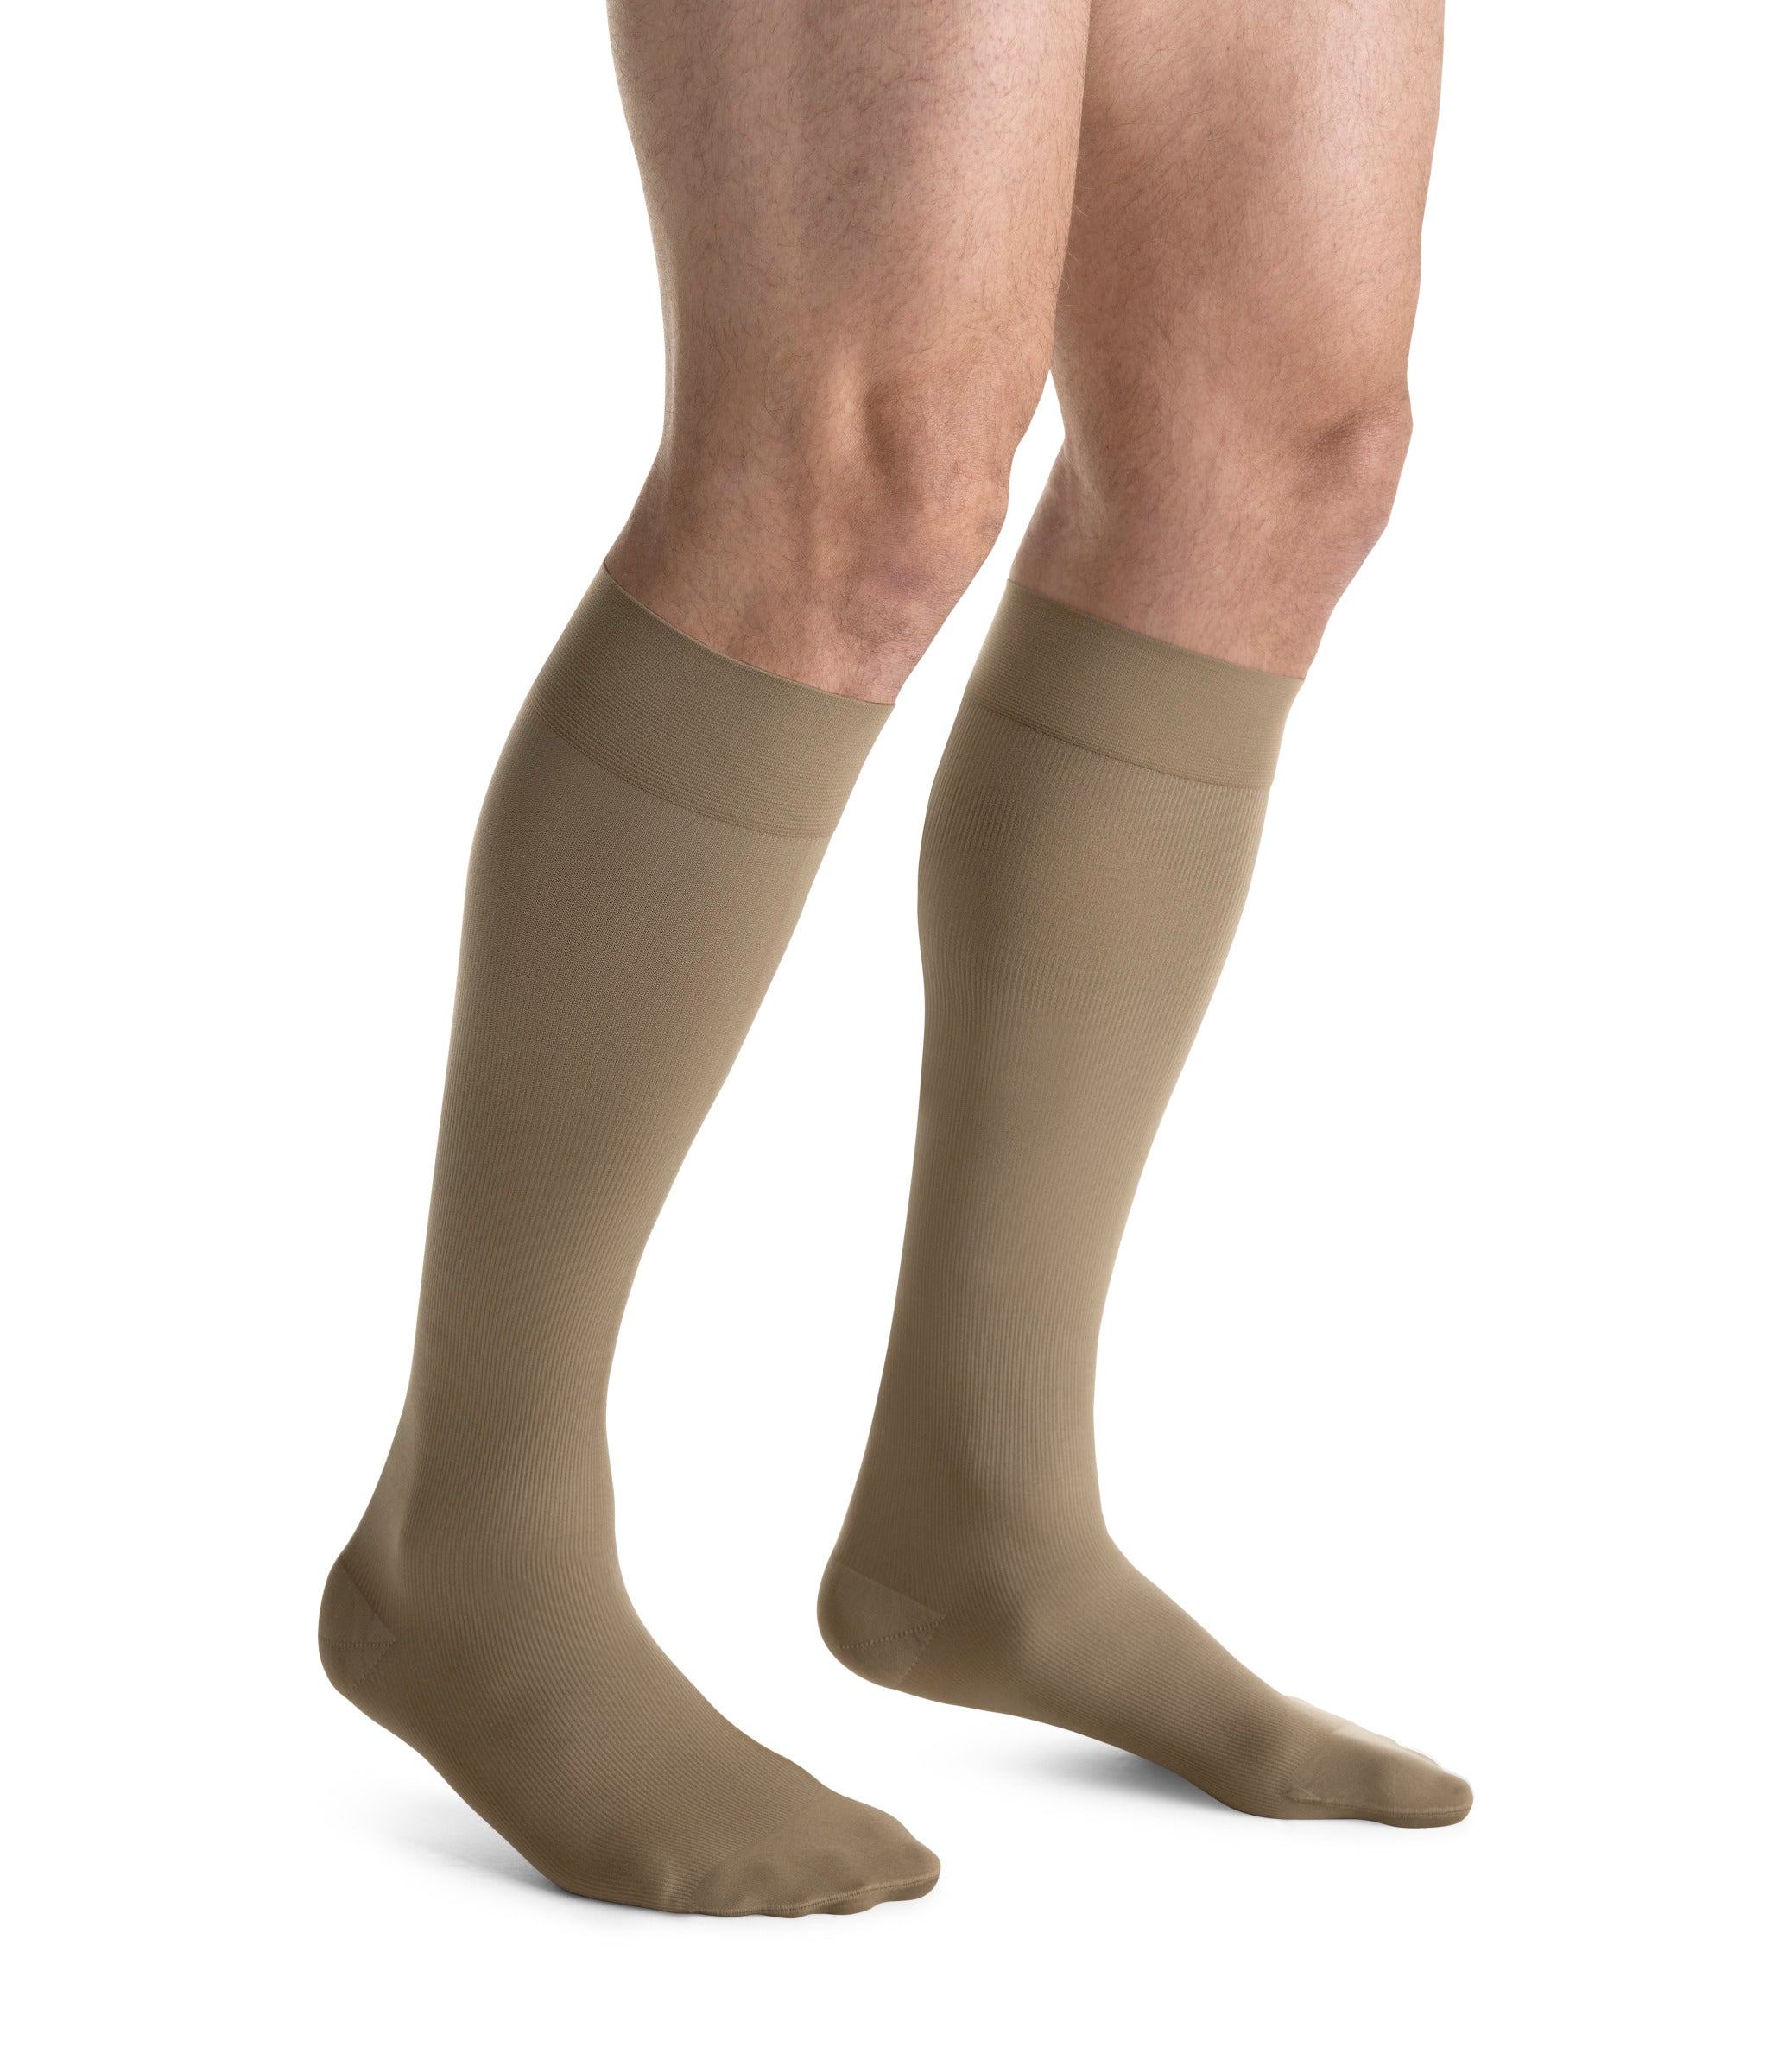 JOBST forMen Compression Socks 20-30 mmHg Knee High